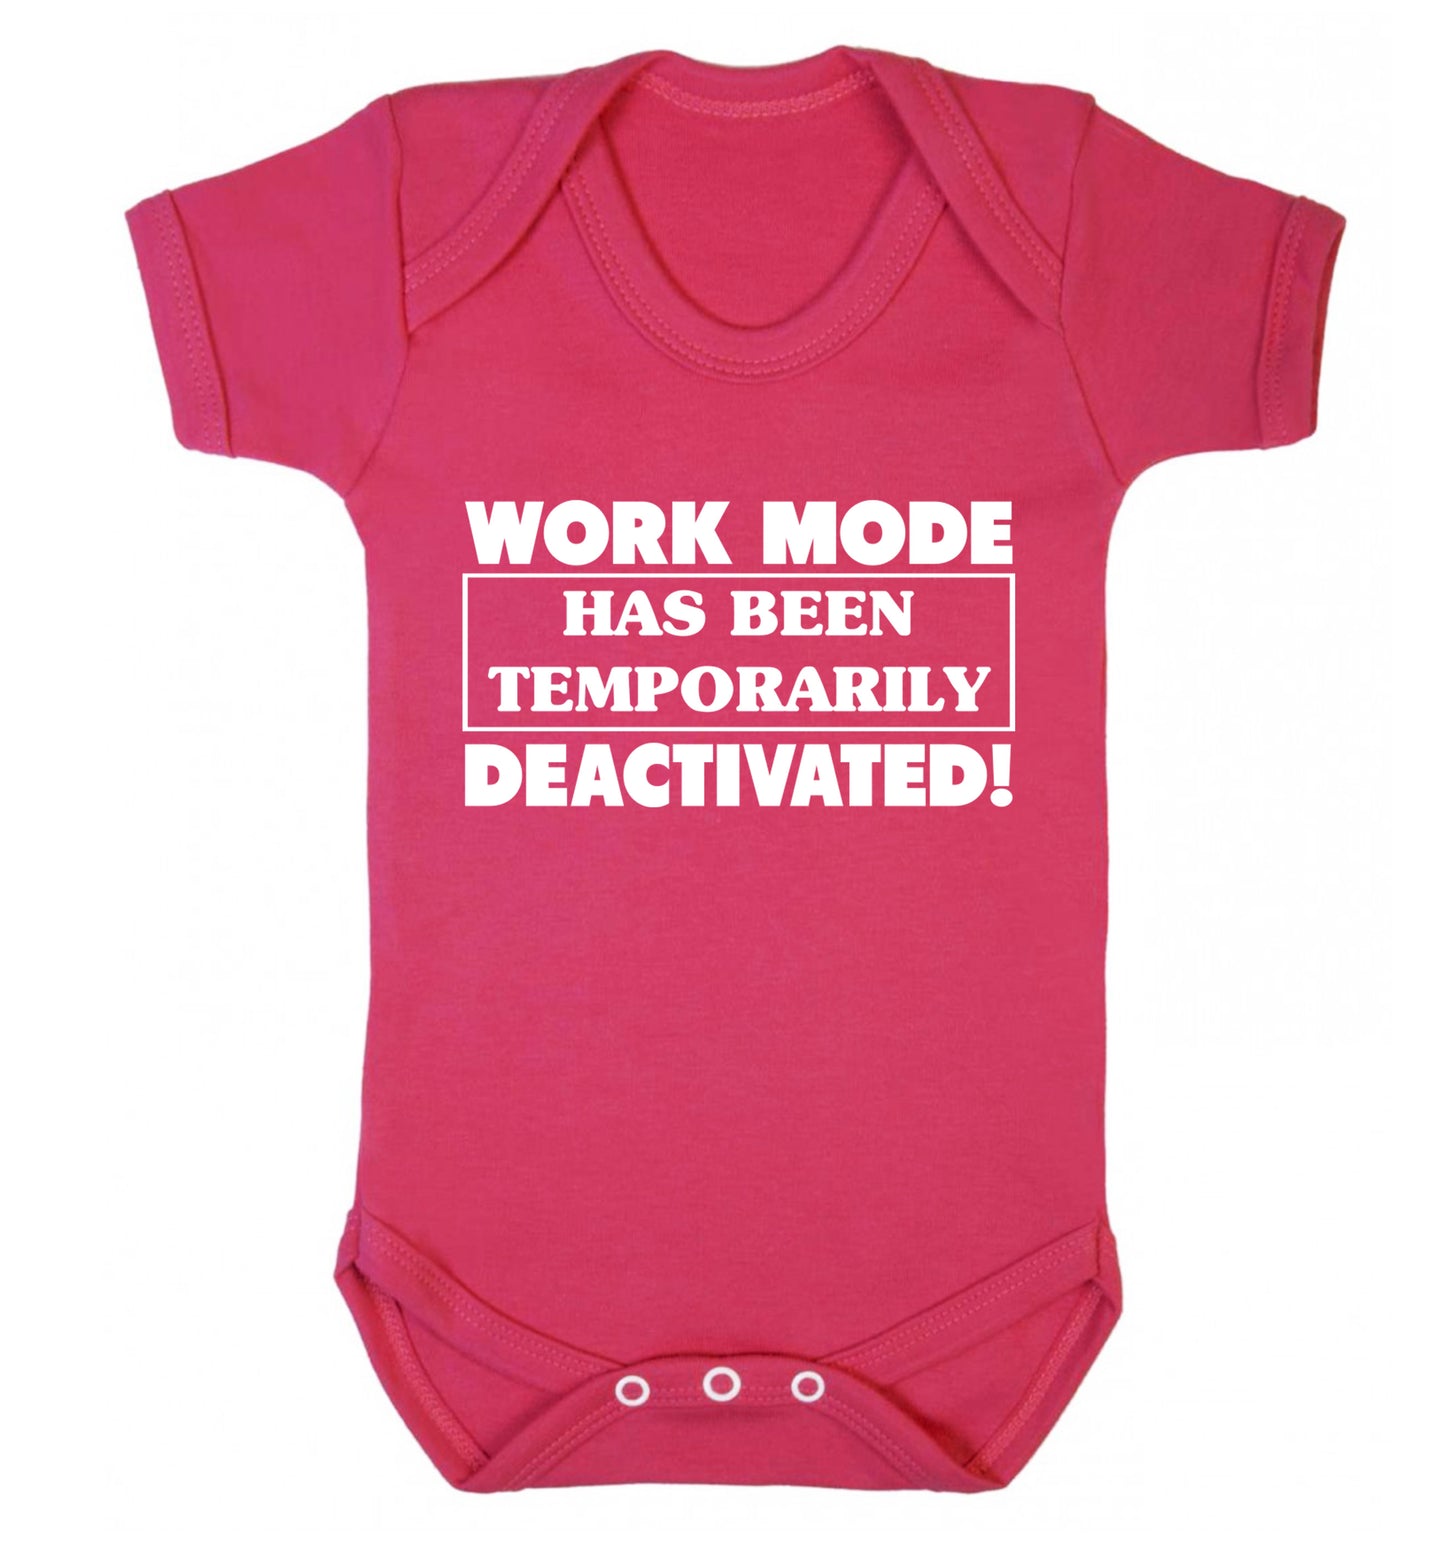 Work mode has now been temporarily deactivated Baby Vest dark pink 18-24 months